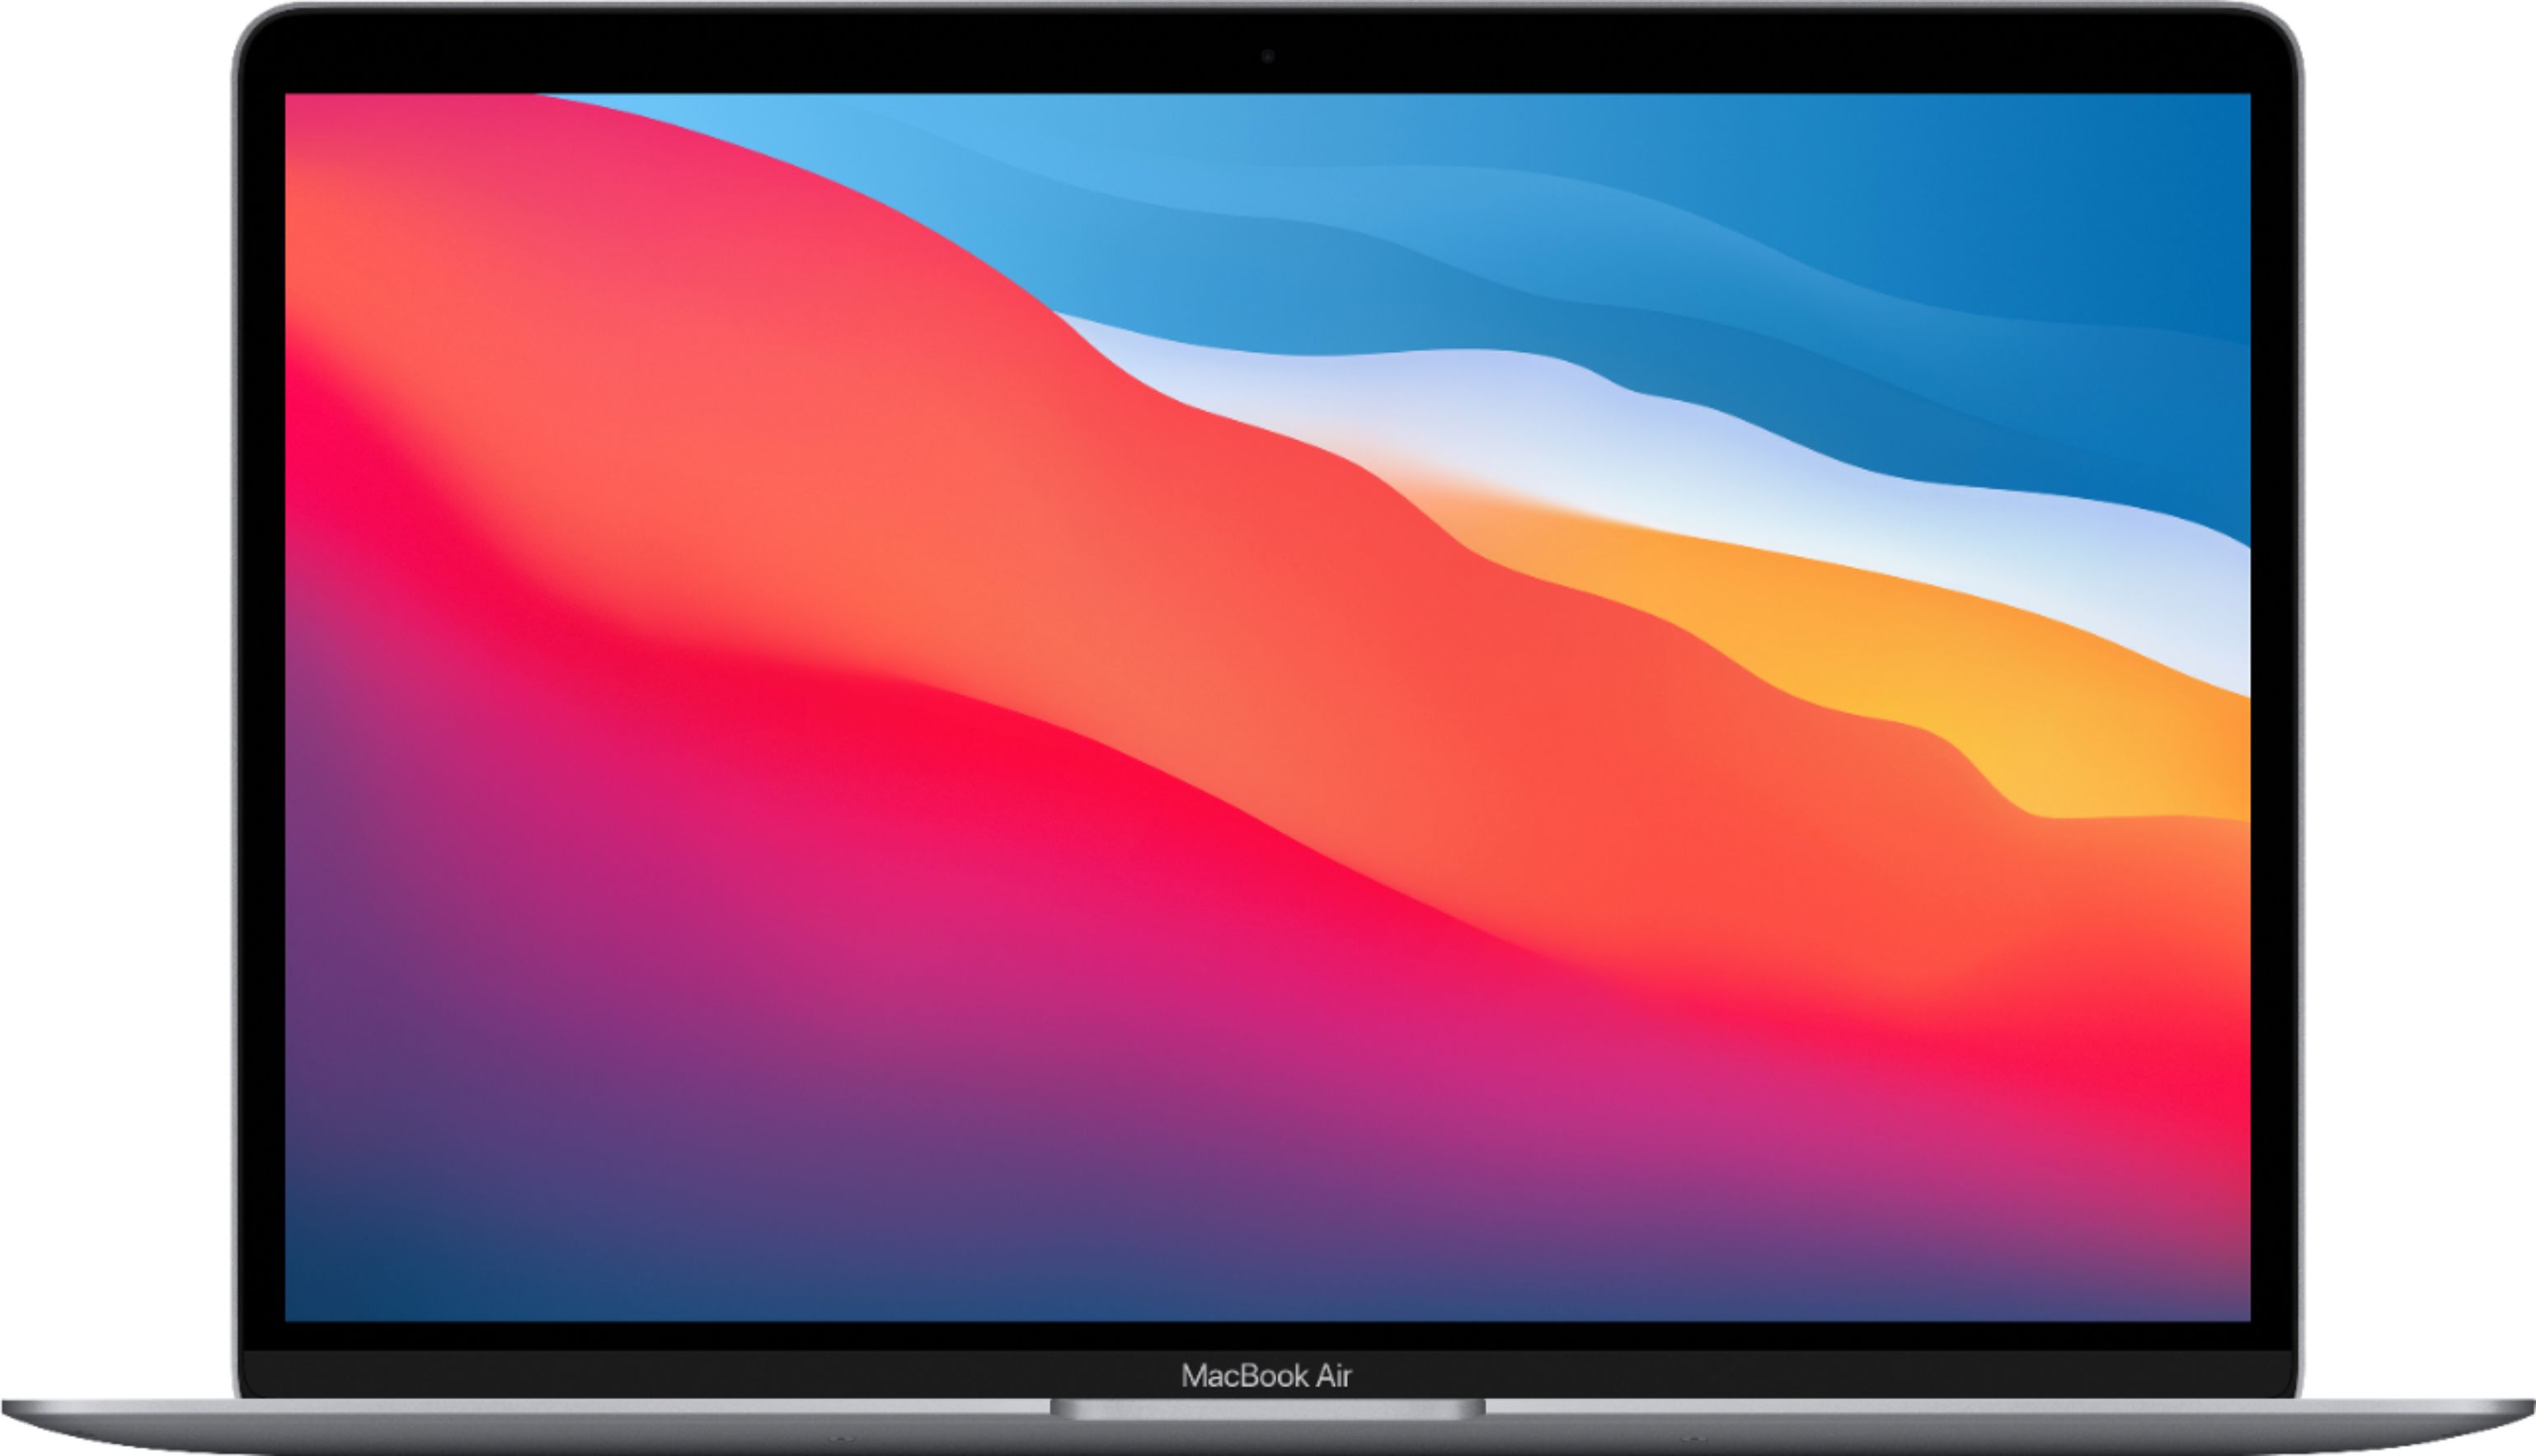 Used macbook pro retina display for sale so cut